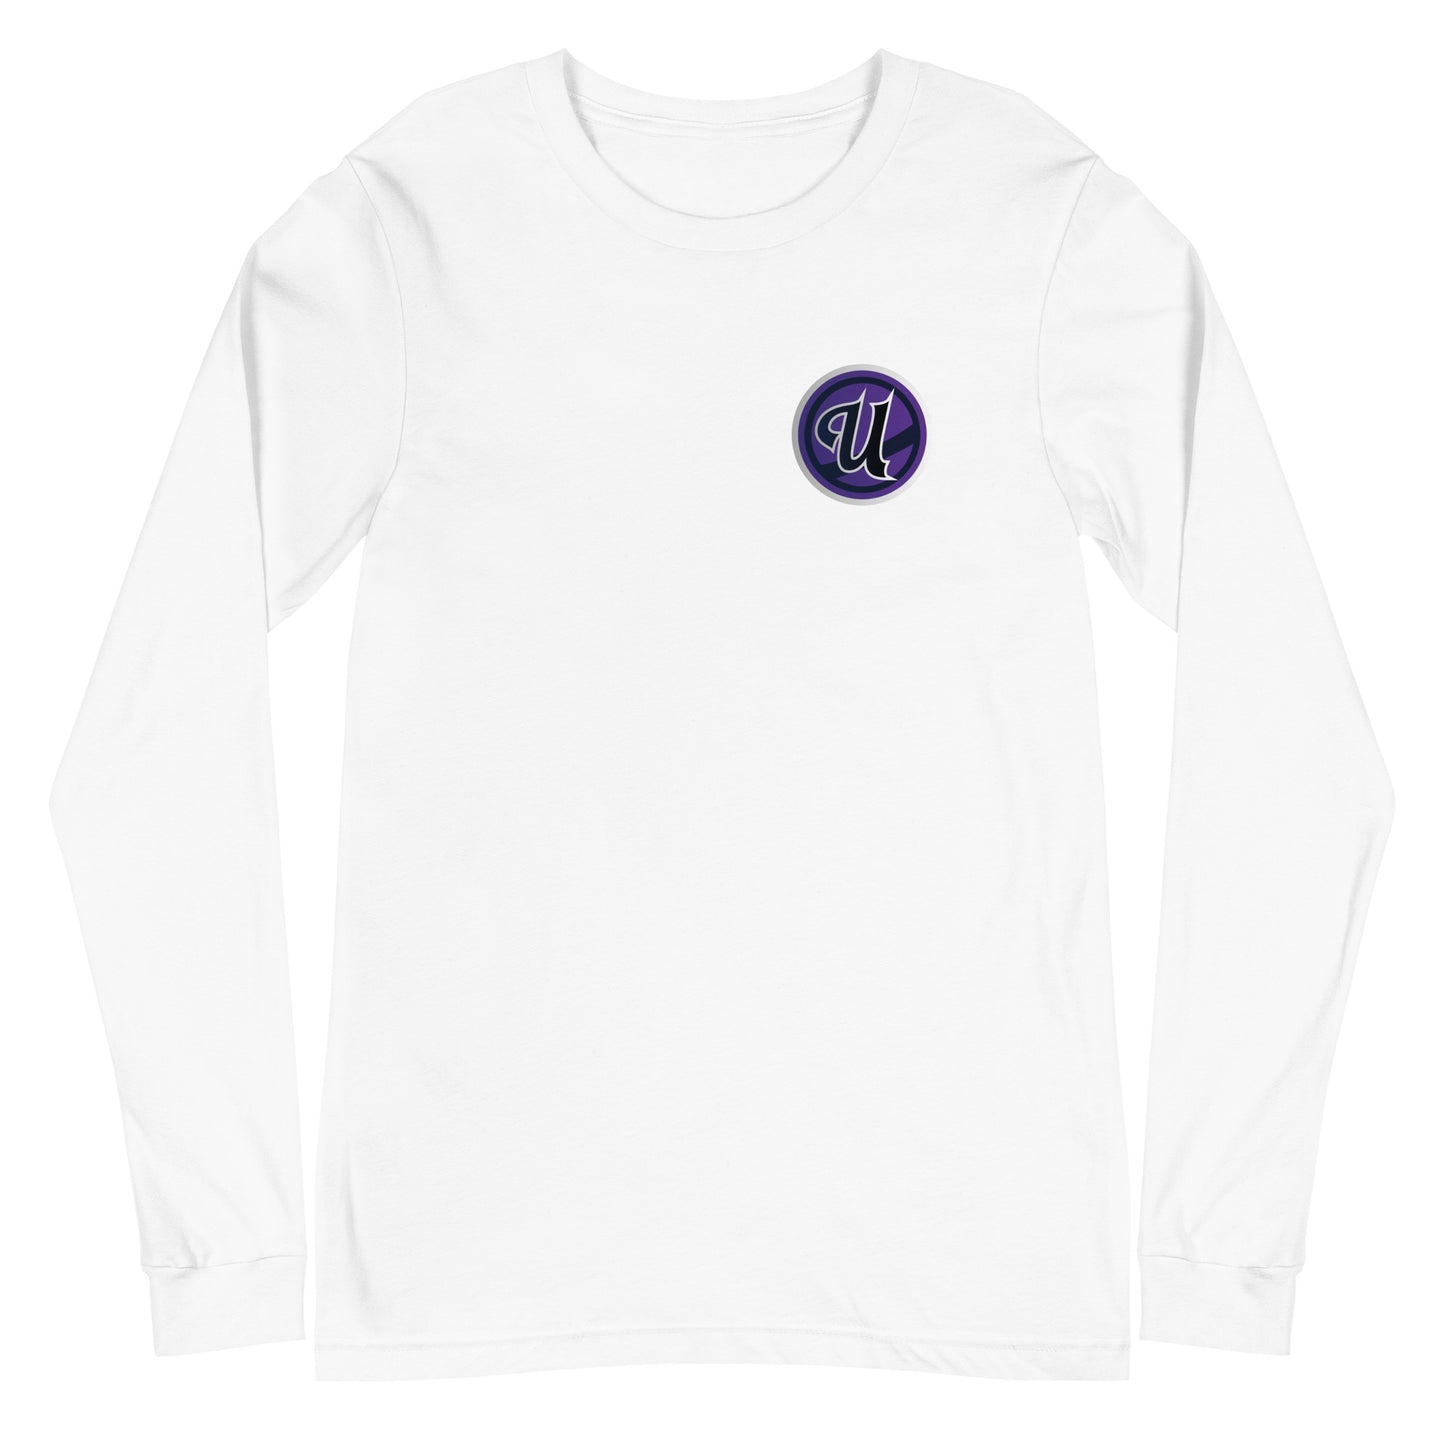 UAHL Winter Series - Saturn Long Sleeve Shirt